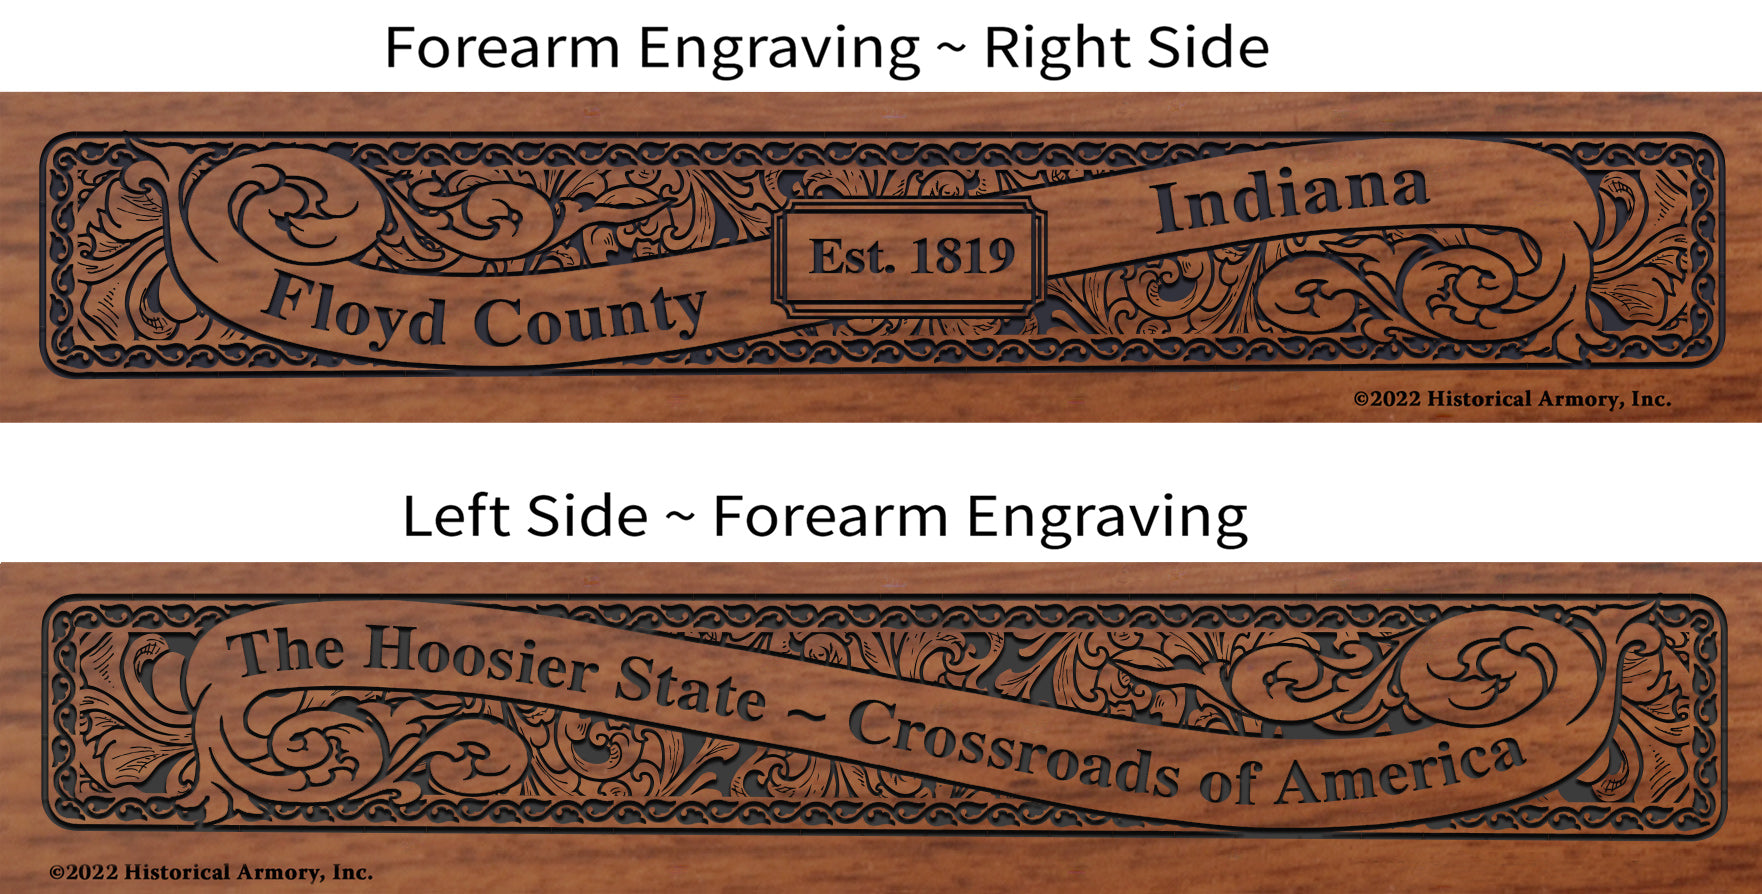 Floyd County Indiana Engraved Rifle Forearm